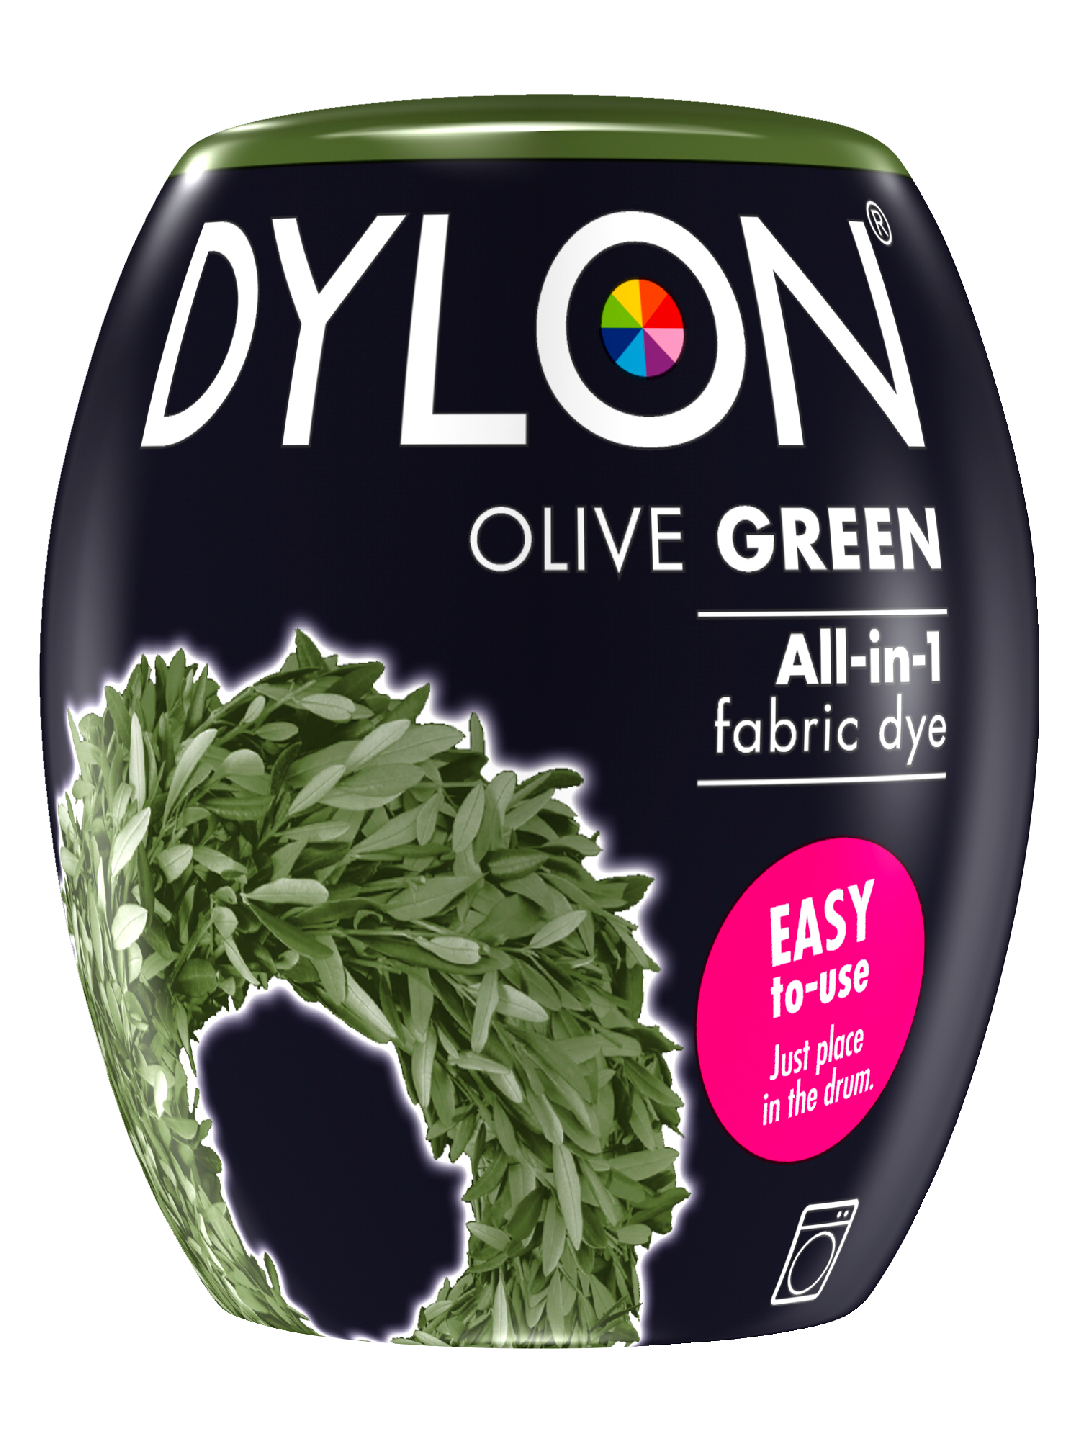 Dylon 350g Olive Green 34 tekstiiliväri